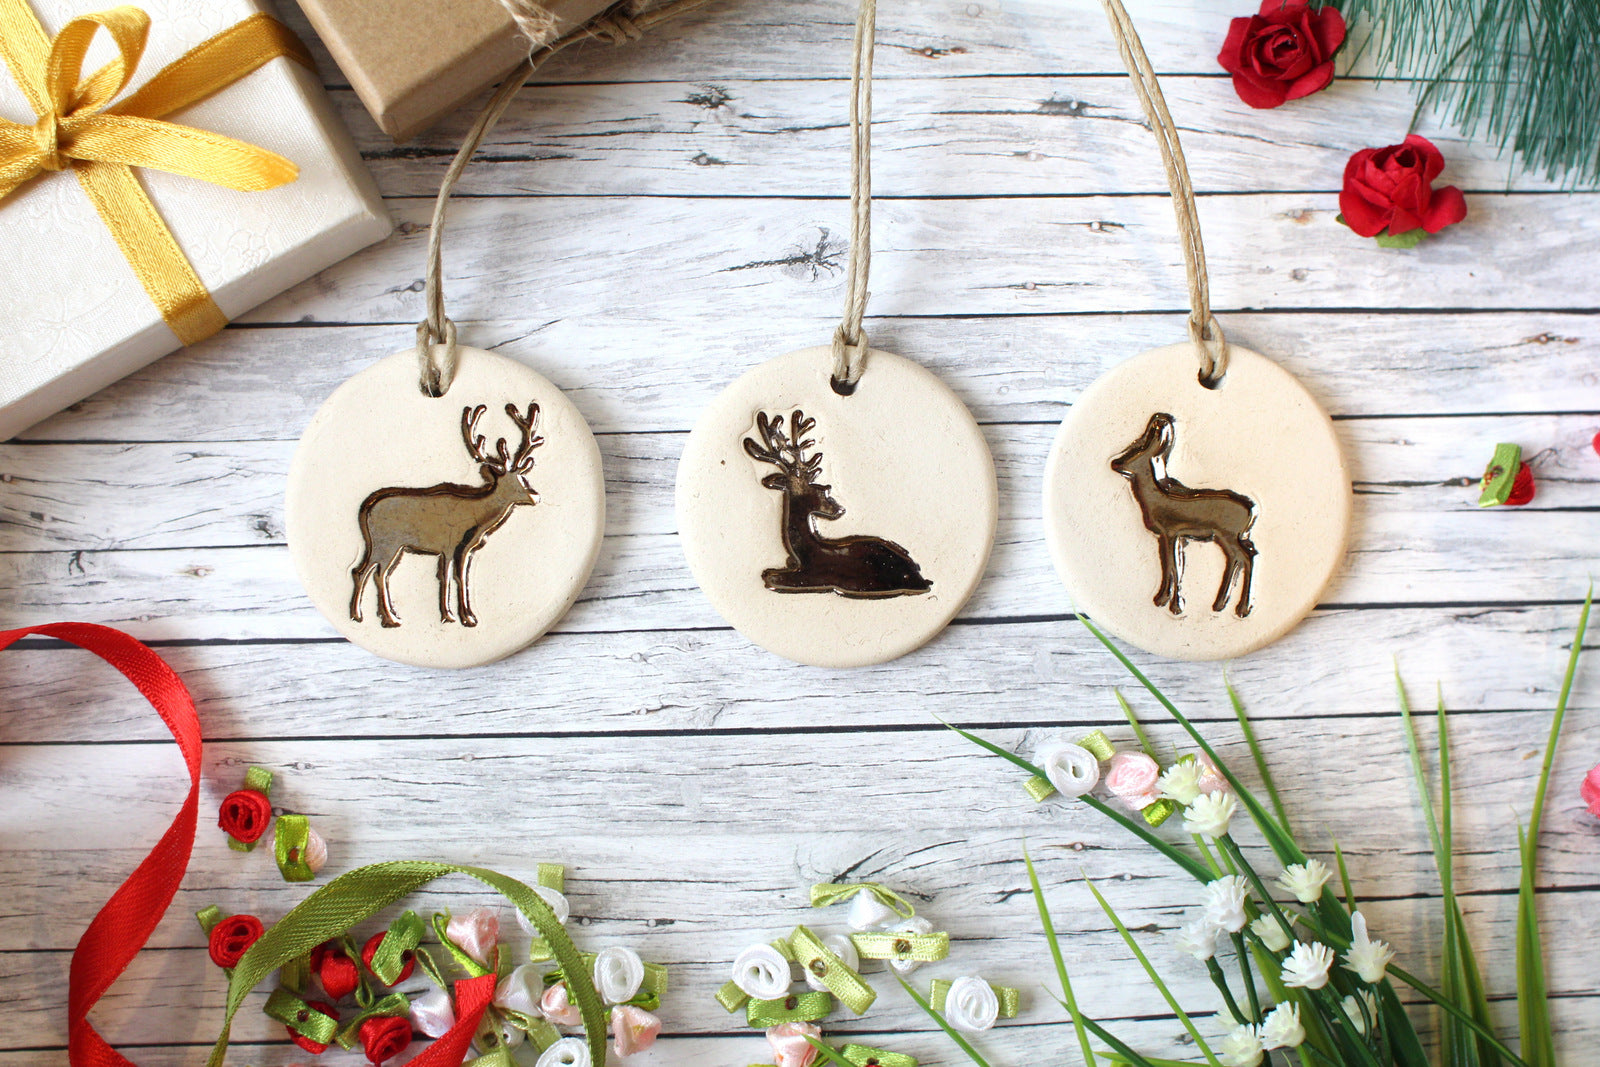 Deer ornaments